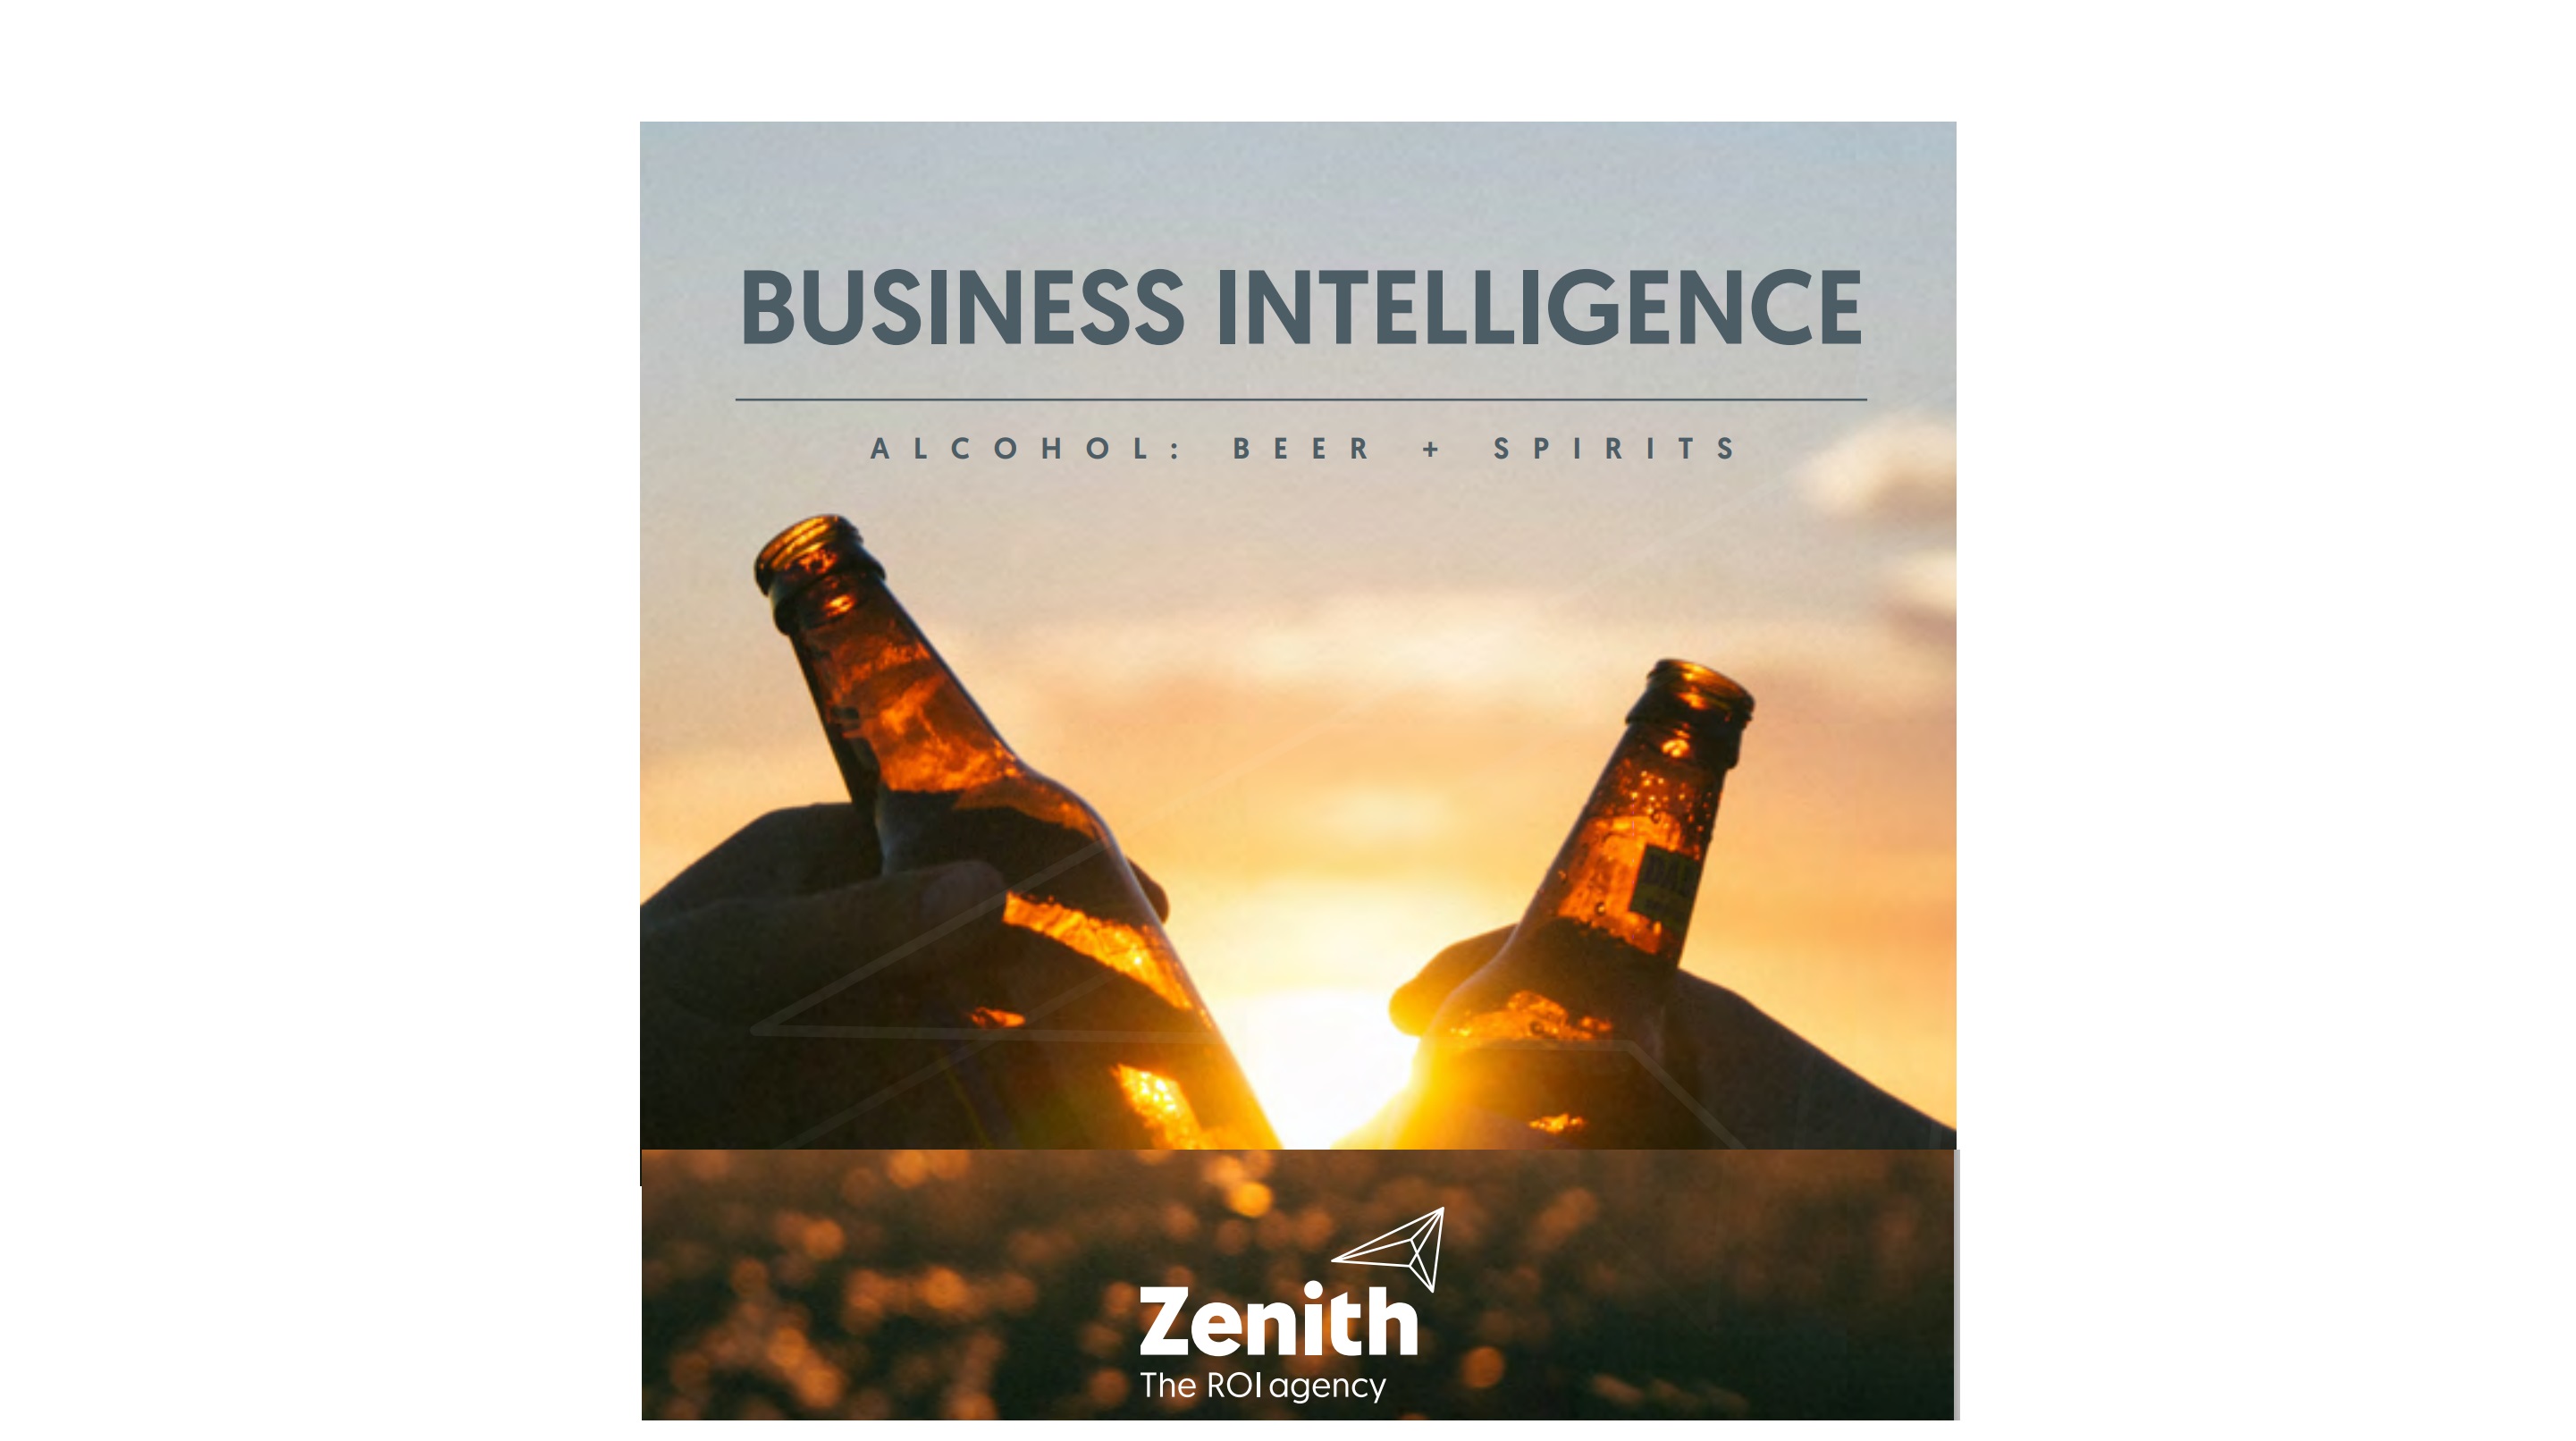 BUSINESS intelligence, zenith, alcohol, beer, spirits,programapublicidad